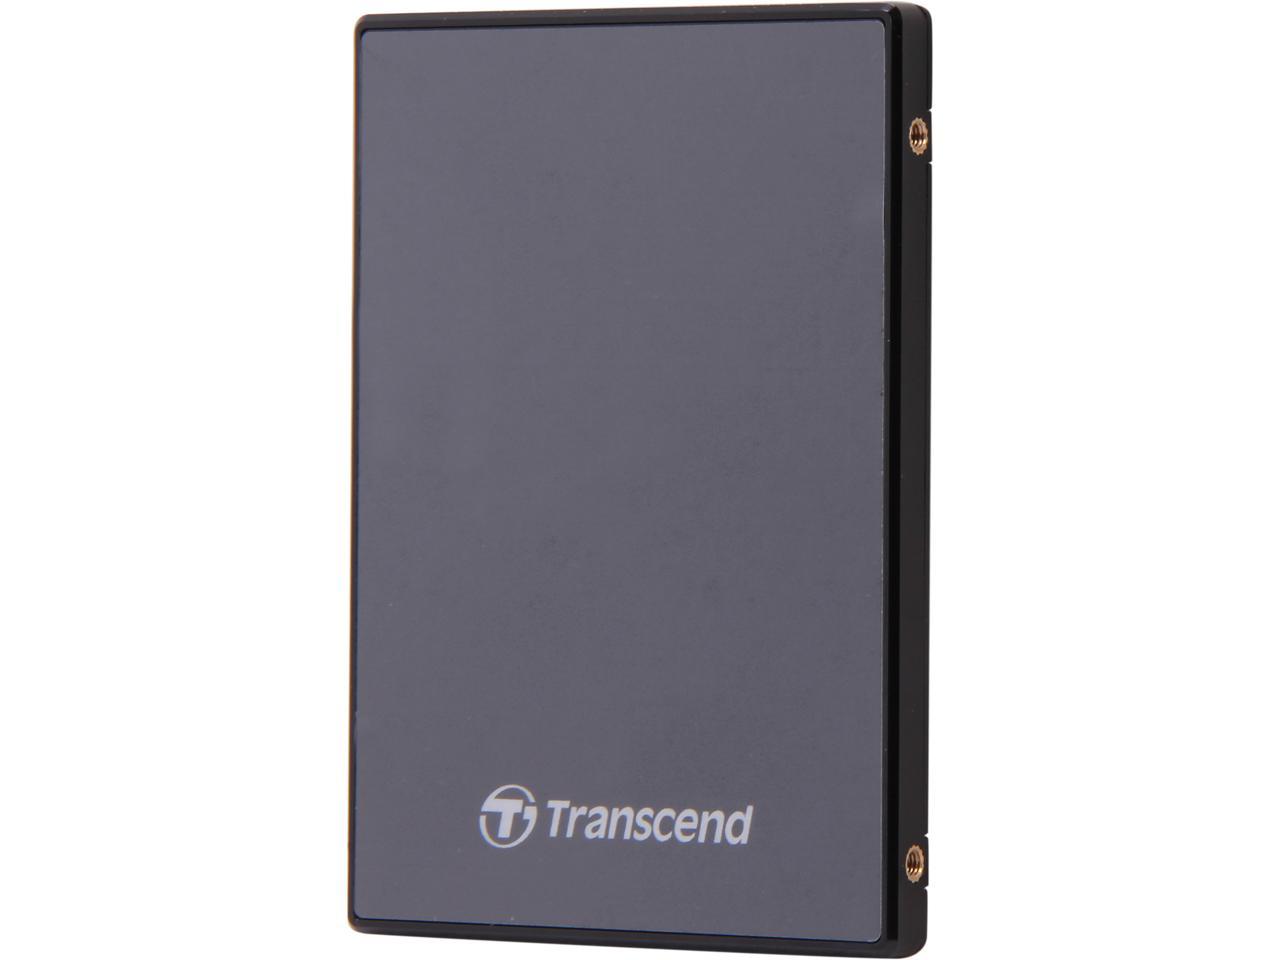 Transcend 2.5" 64GB PATA MLC Internal Solid State (SSD) TS64GPSD330